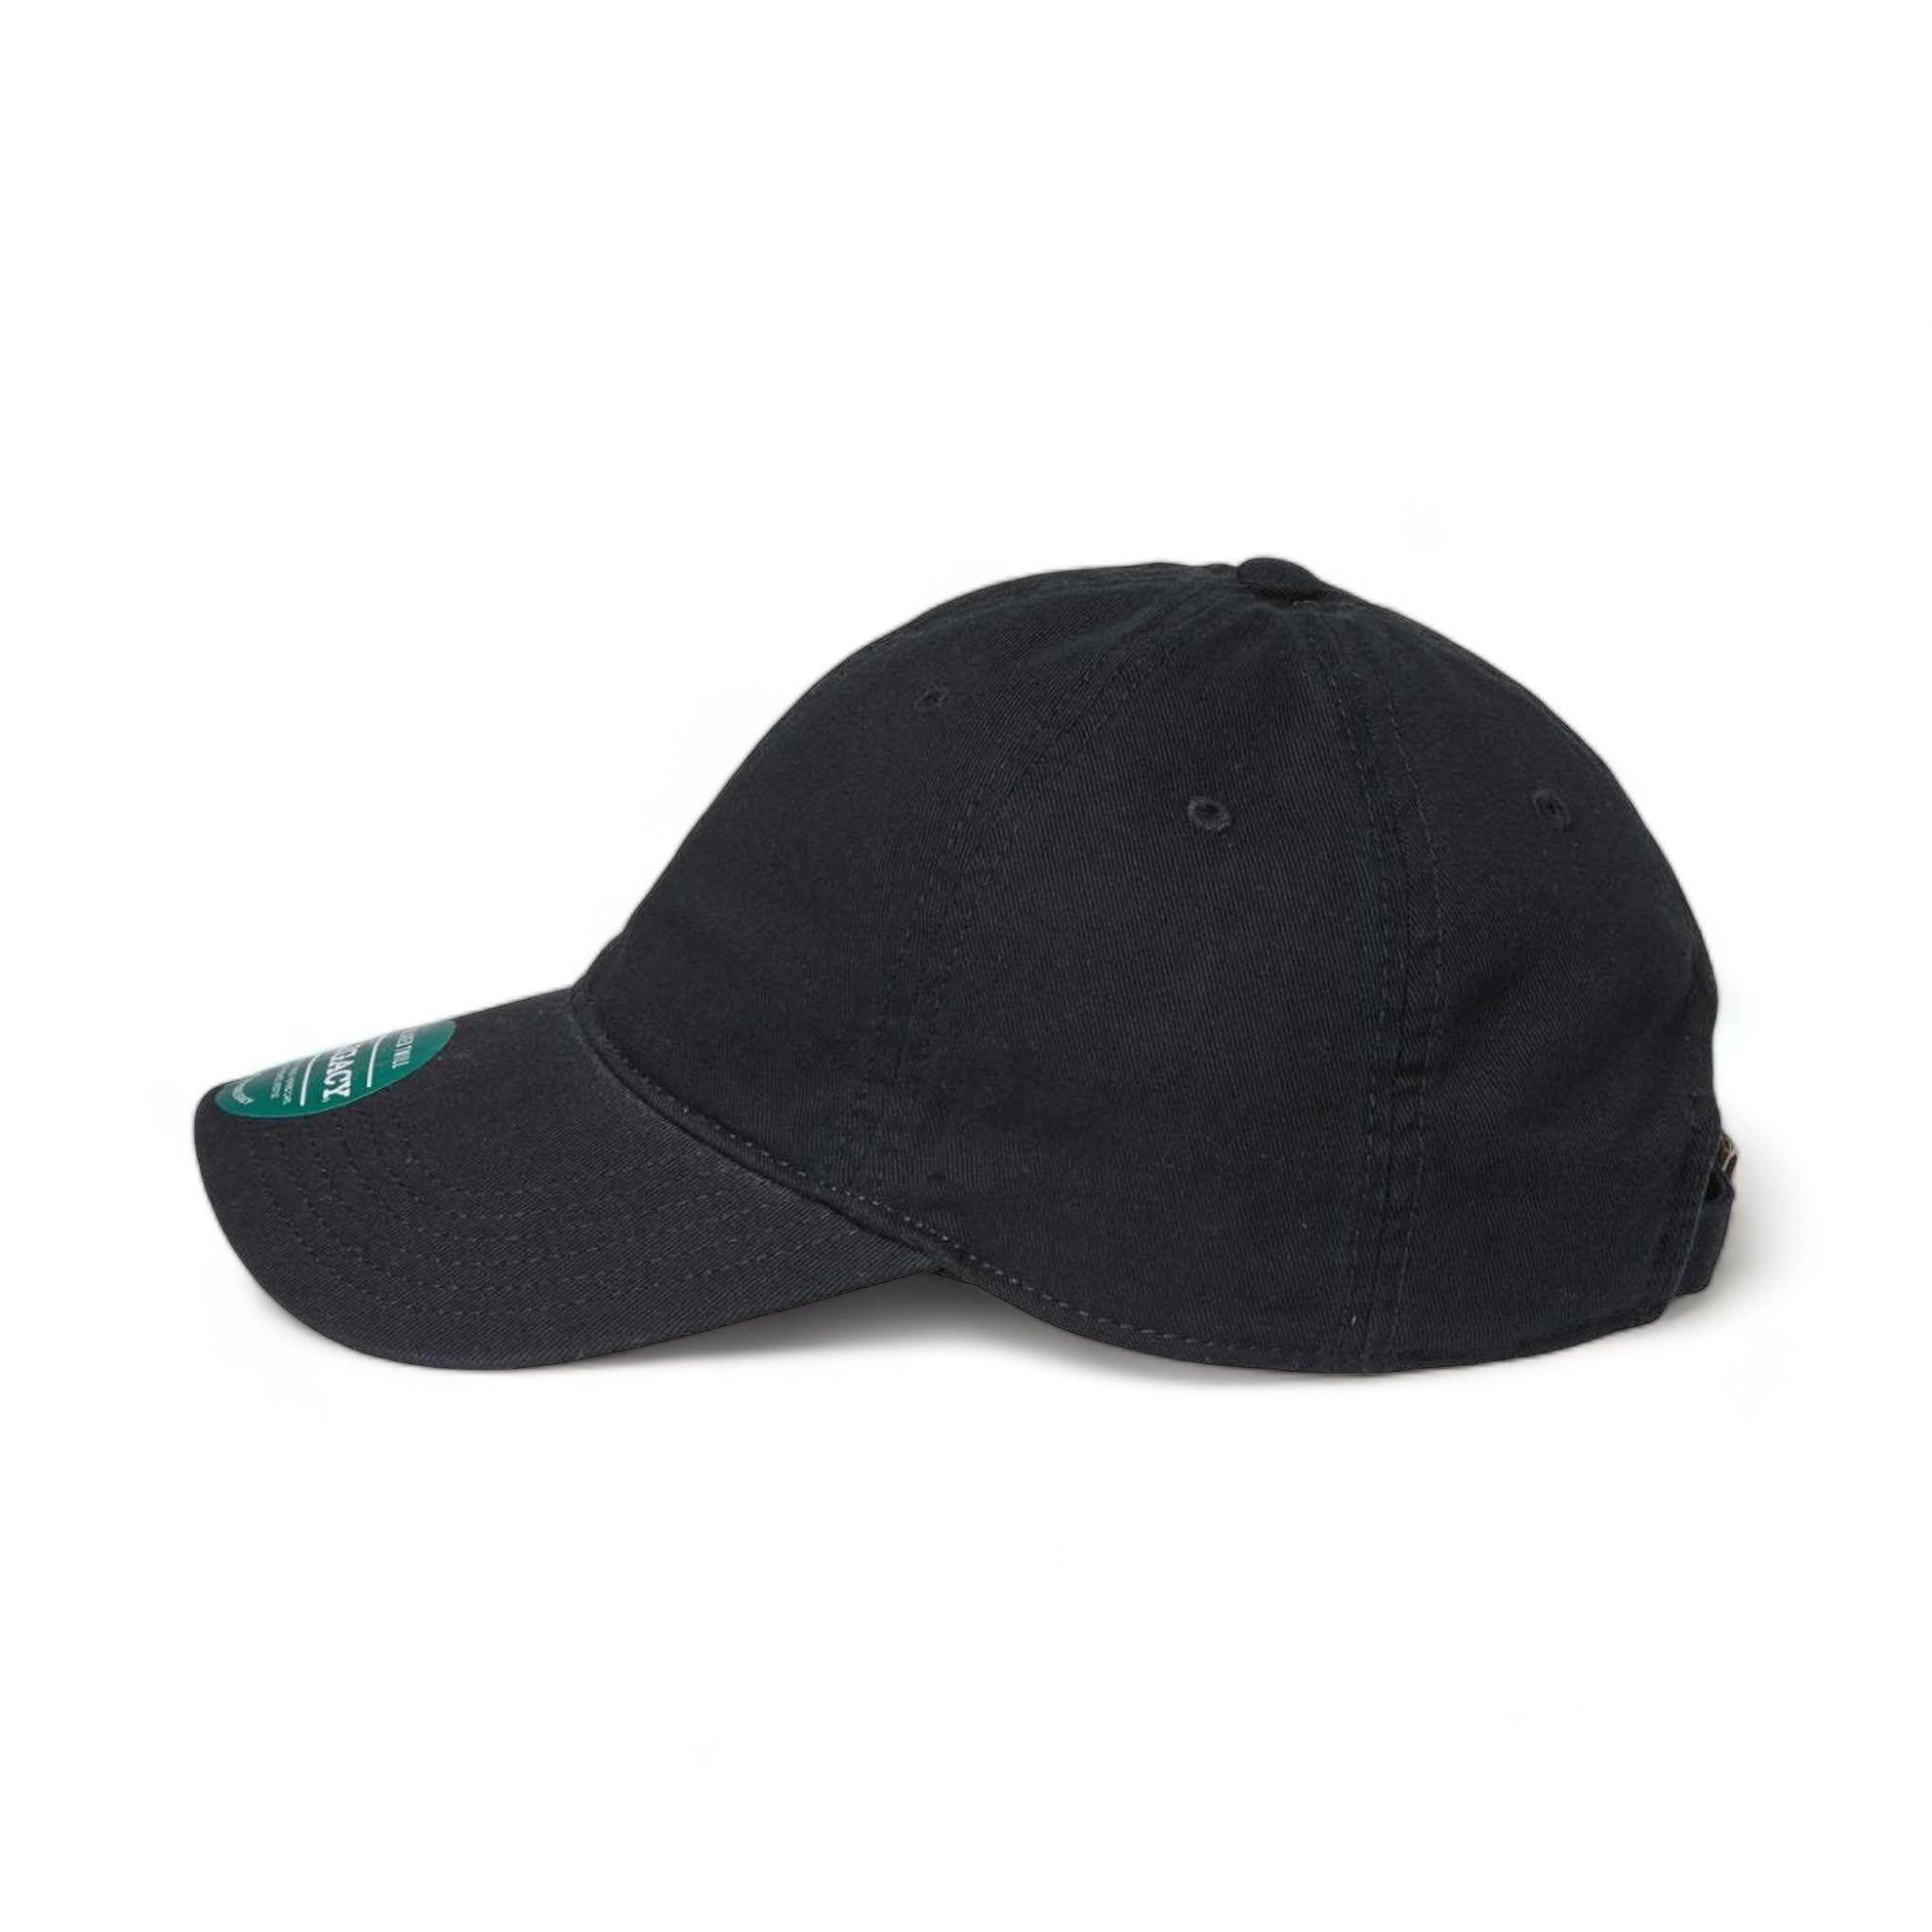 Side view of LEGACY EZA custom hat in black